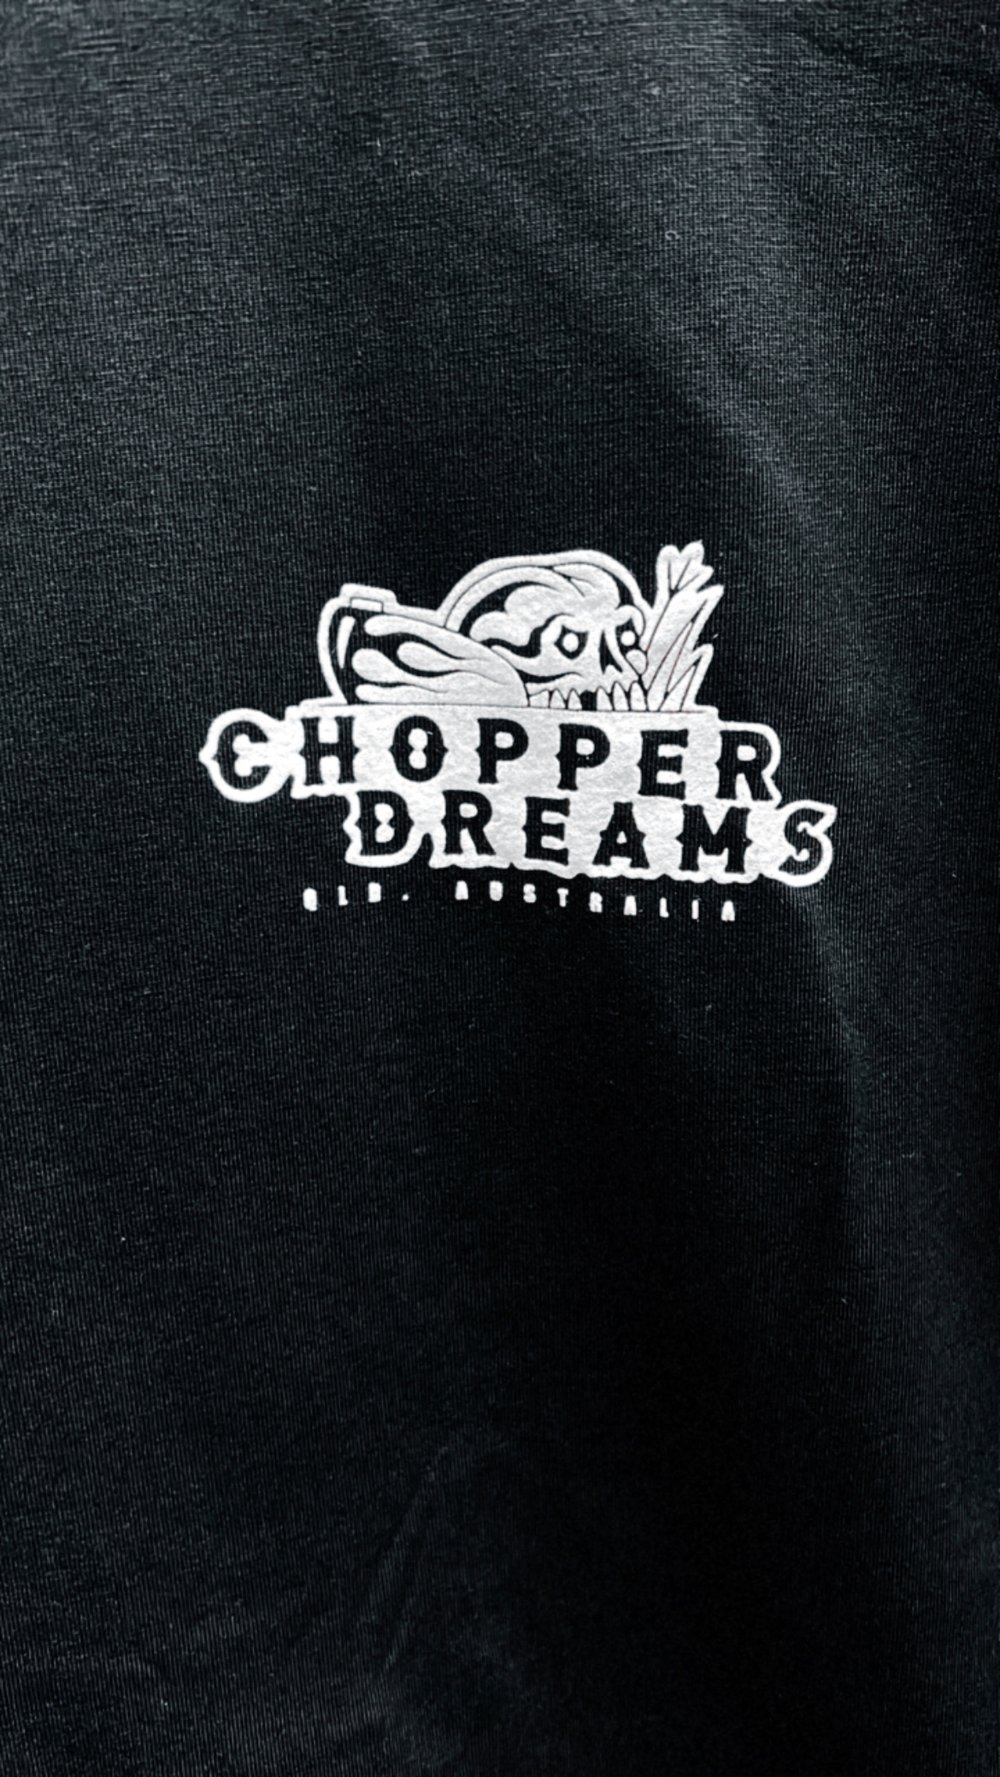 Chopper Dreams " THE EXECUTIONER" Black Tee